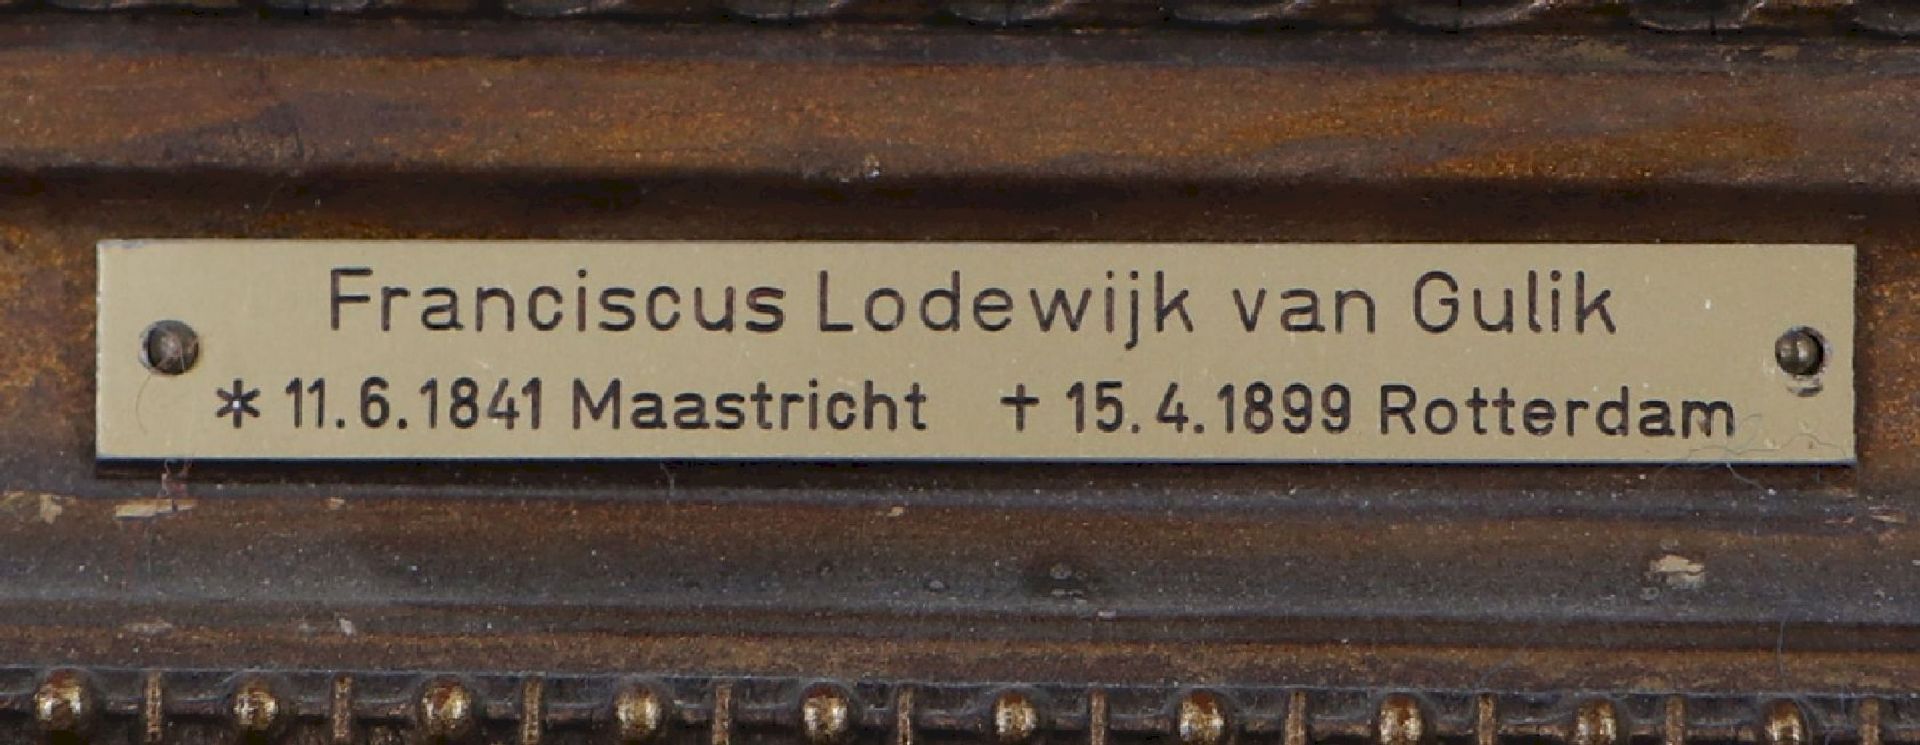 FRANCISCUS LODEWIJK VAN GULIK (1841 Maastricht - 1899 Rotterdam) - Image 6 of 6